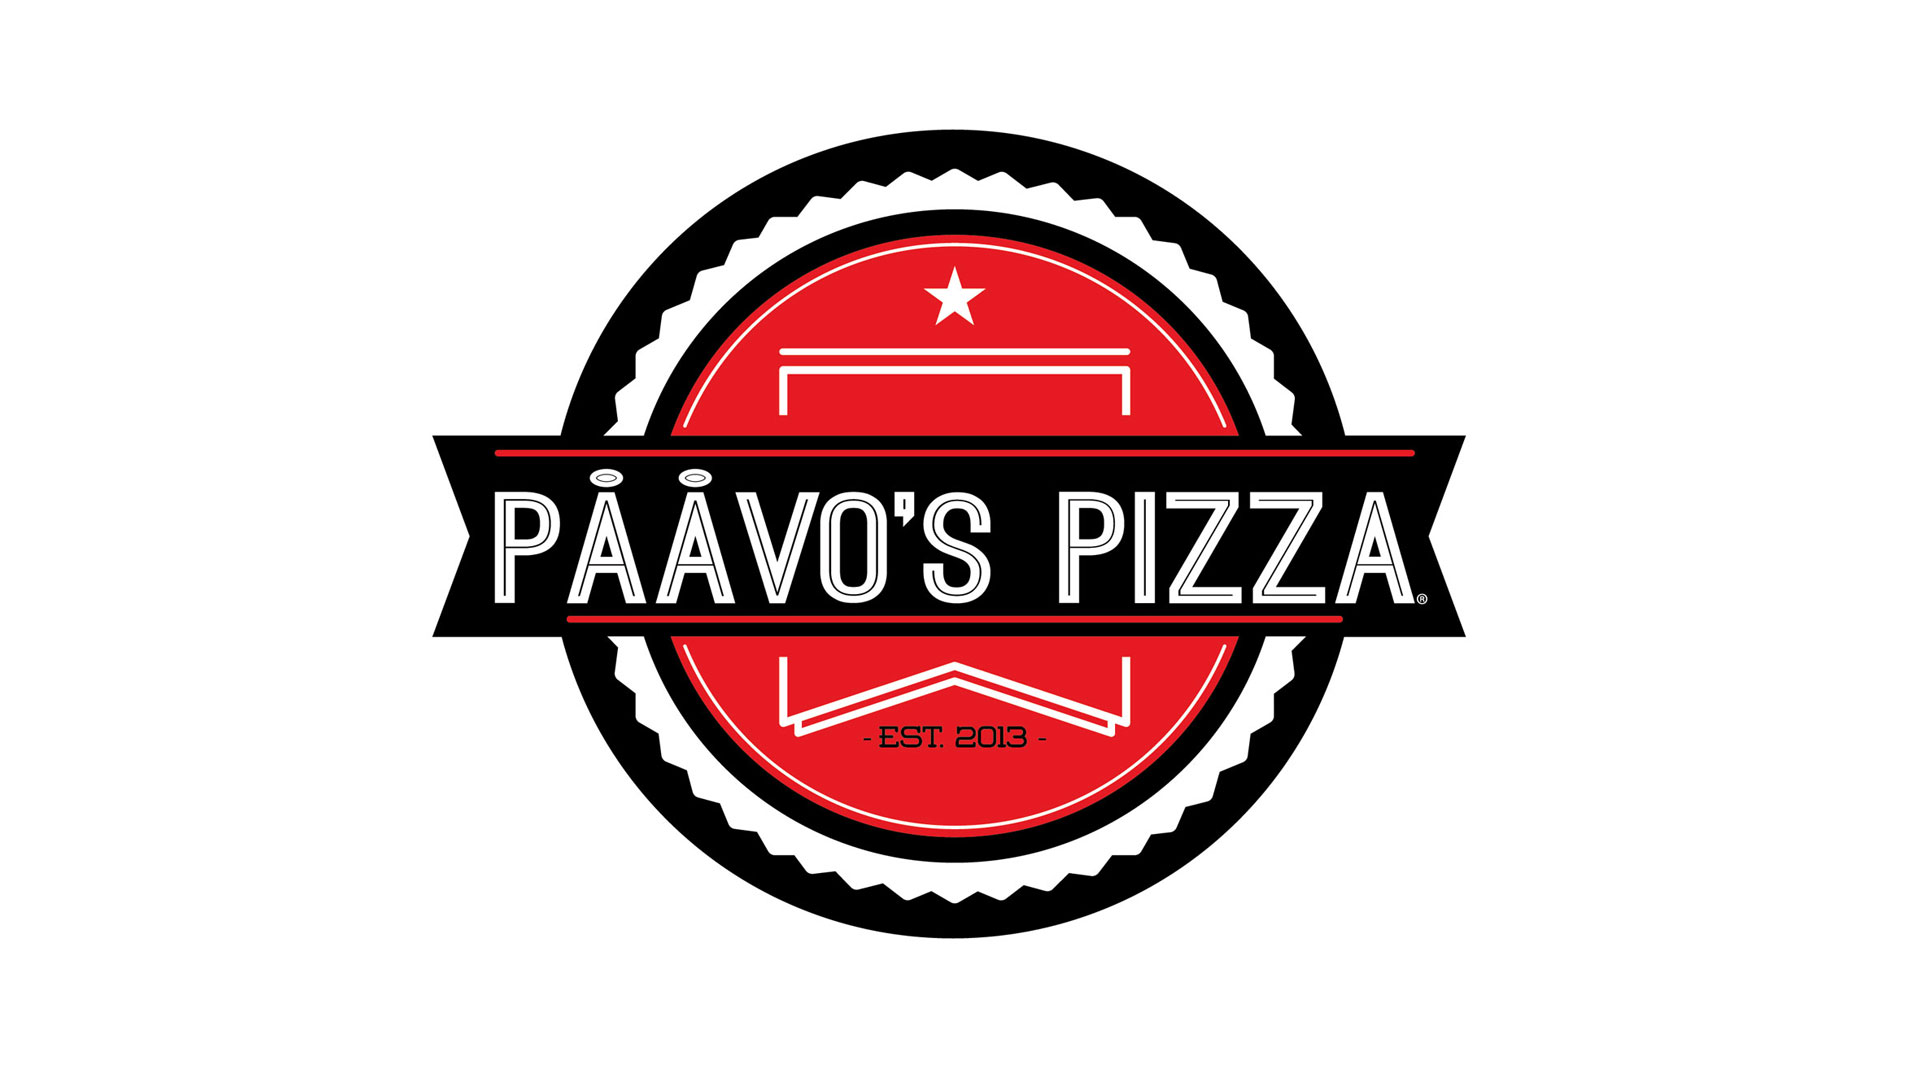 Paavo's Pizza